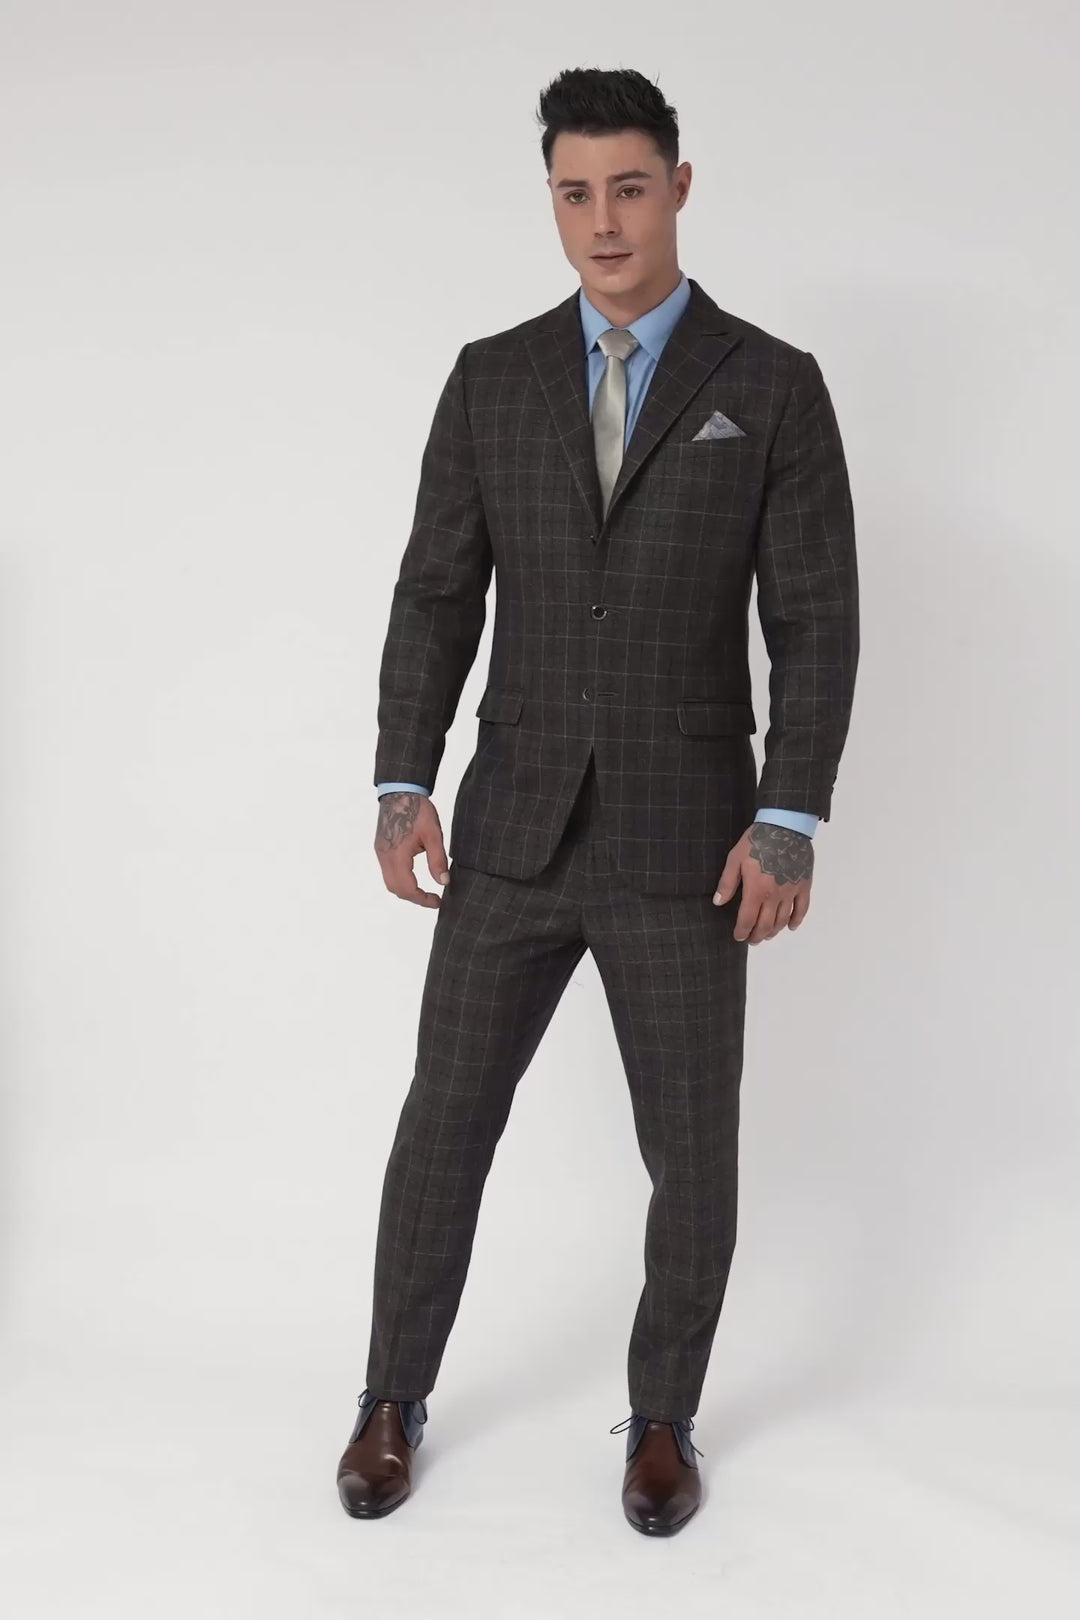 Montauk Cedar Brown Flannel Windowpane Suit